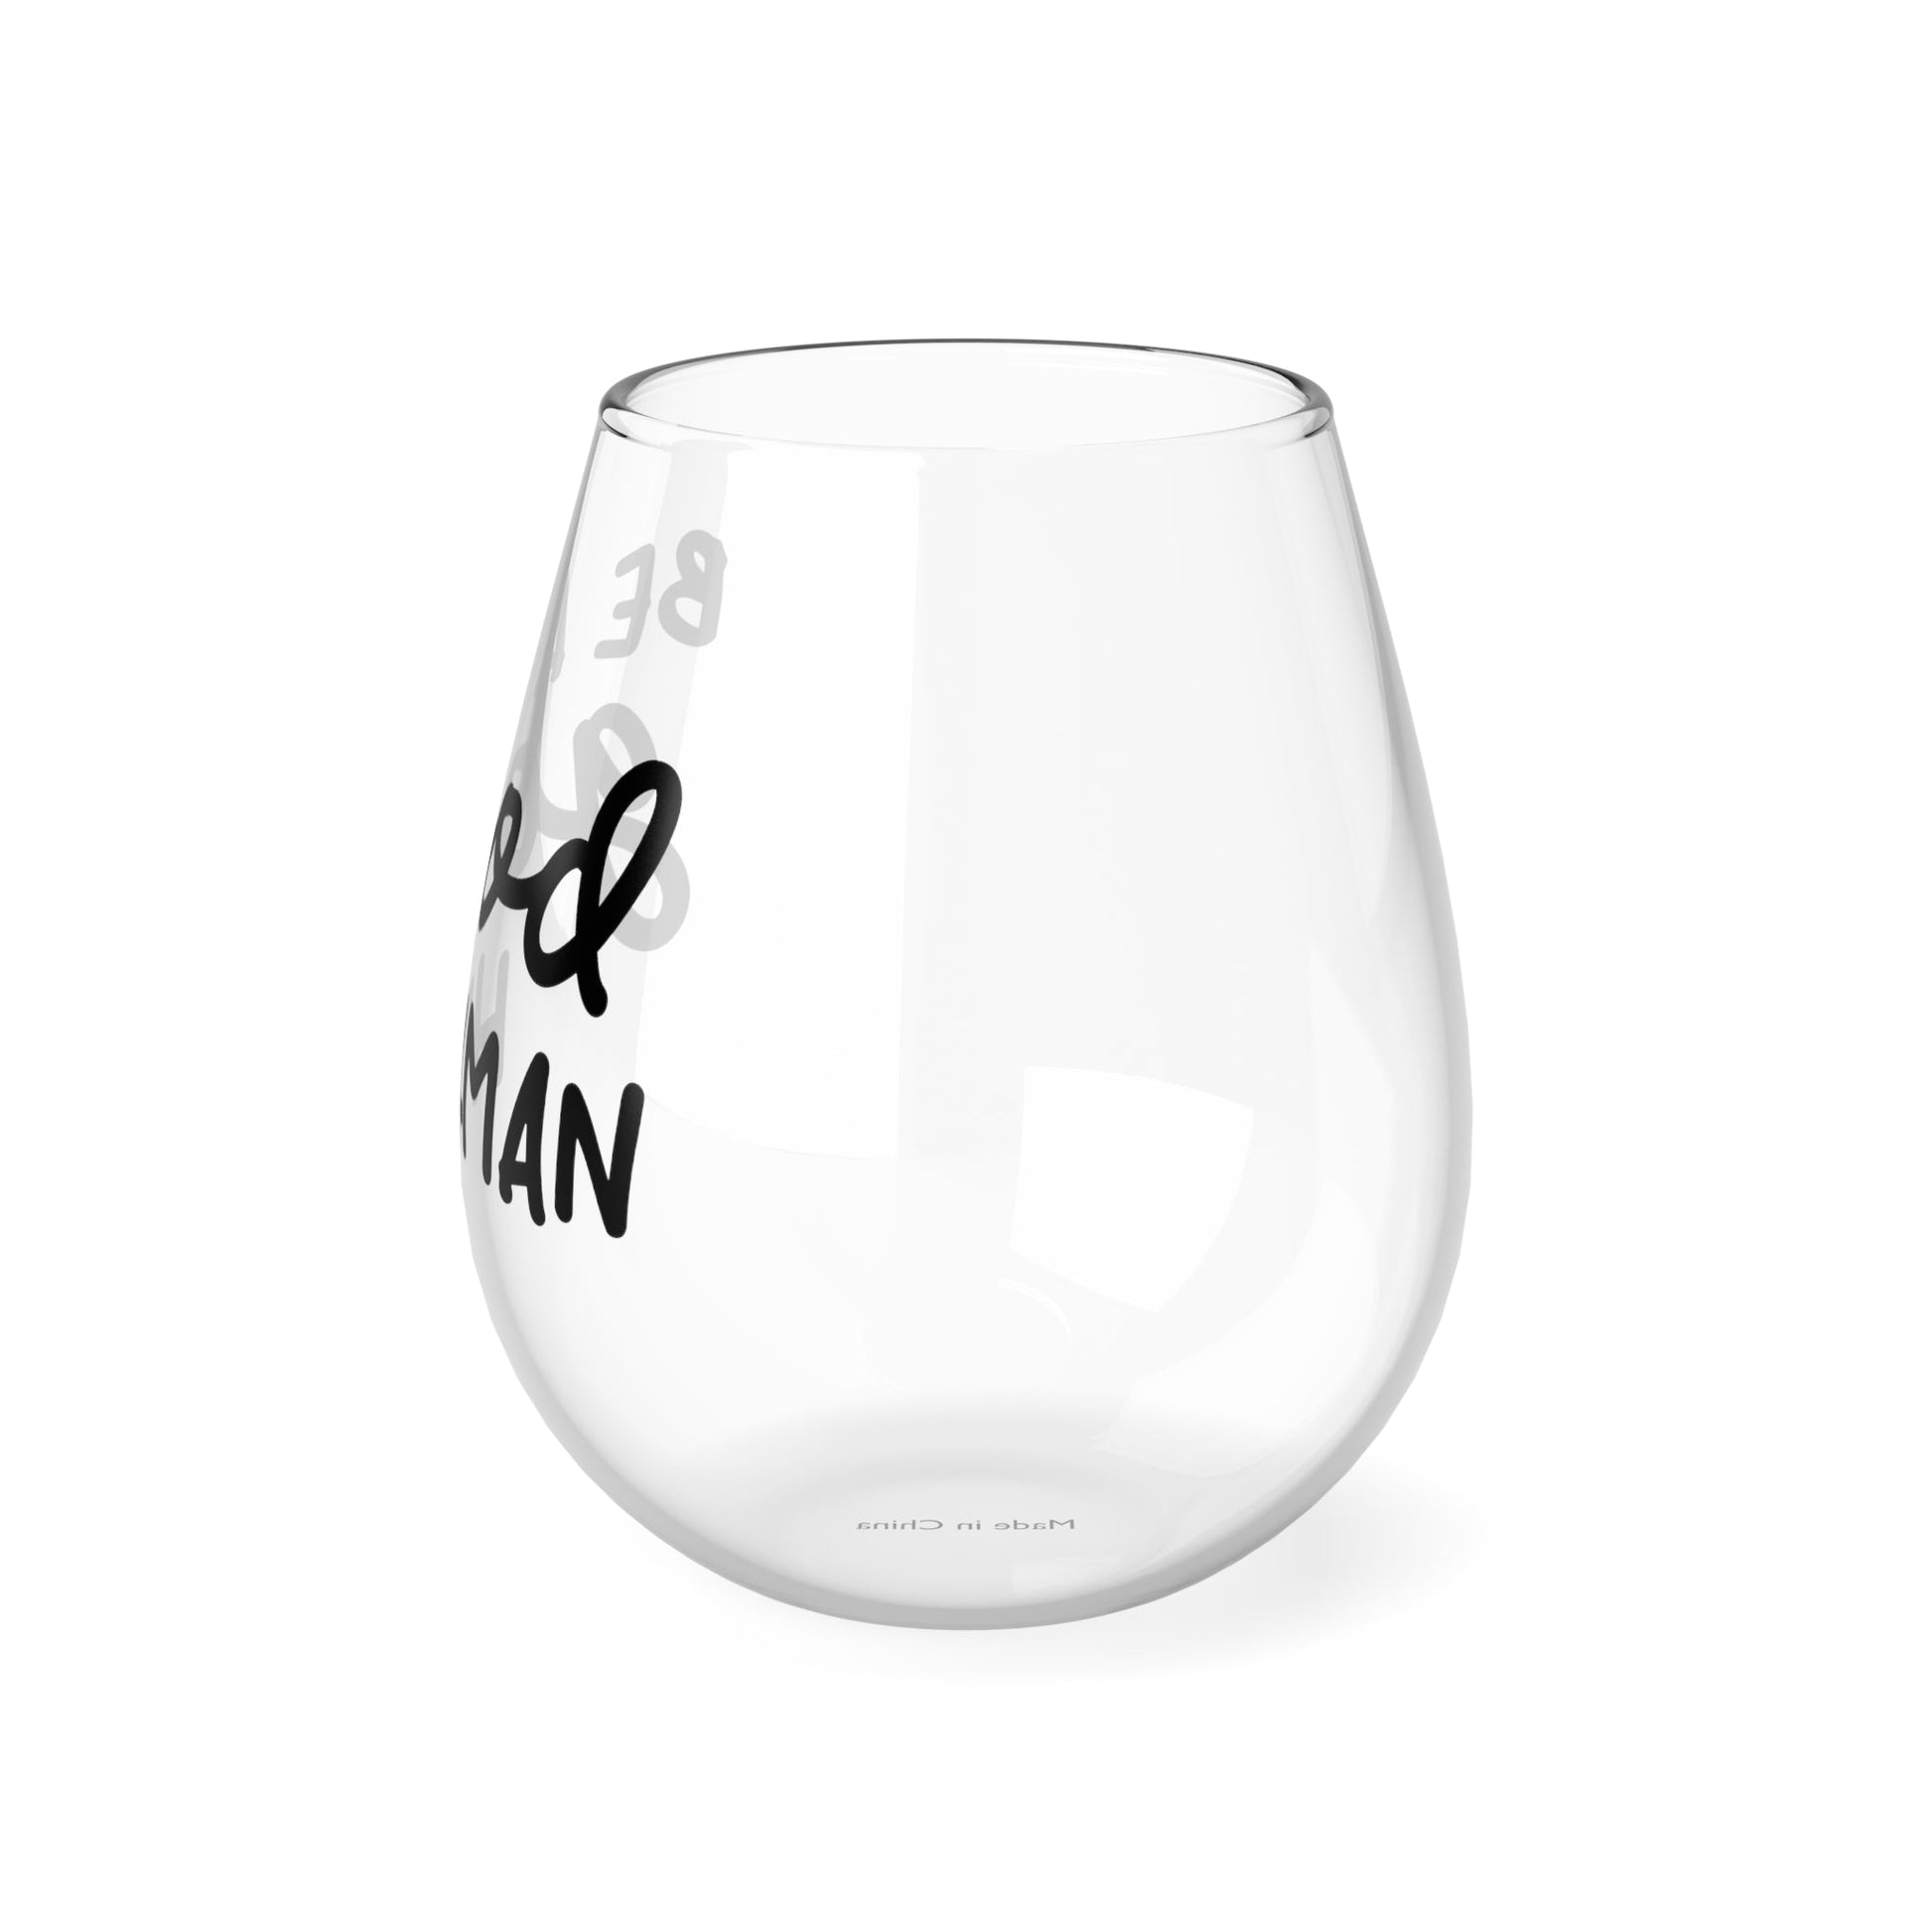 Be A Good Human | Stemless Wine Glass - Detezi Designs-87878866145926848854